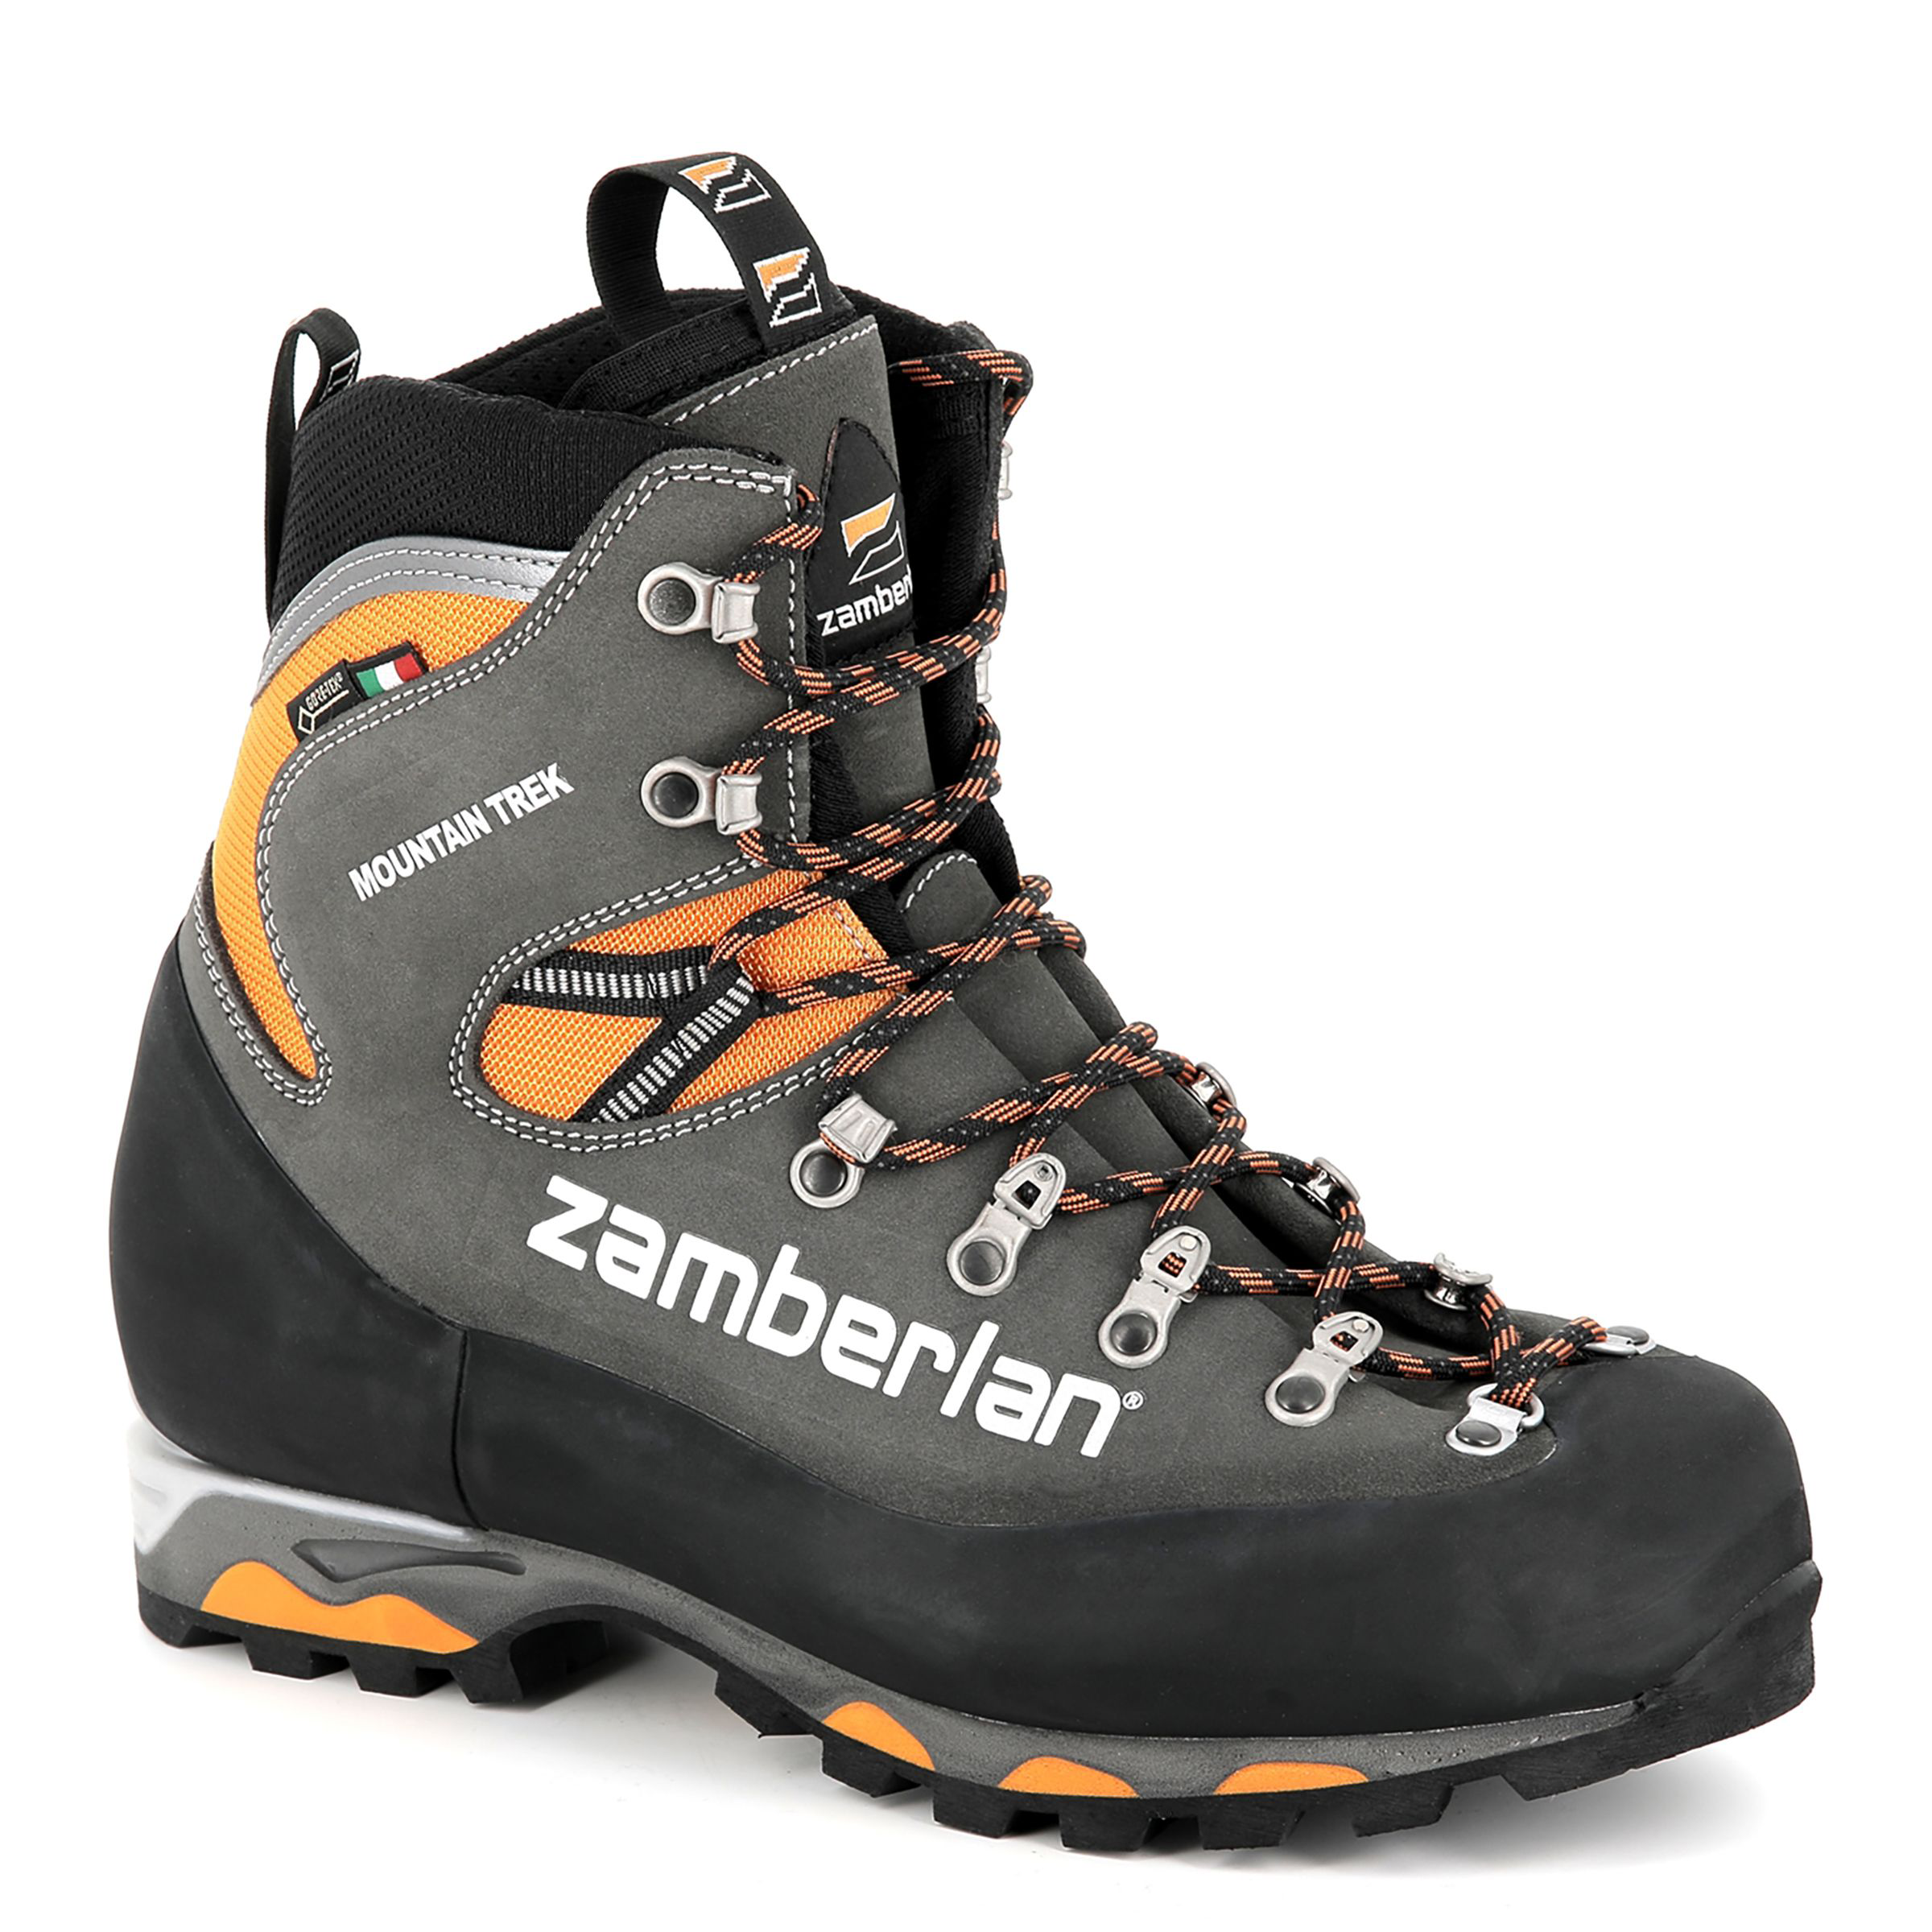 Zamberlan 2092 Mountain Trek GTX RR GORE-TEX Hunting Boots for Men - Gray - 7.5M